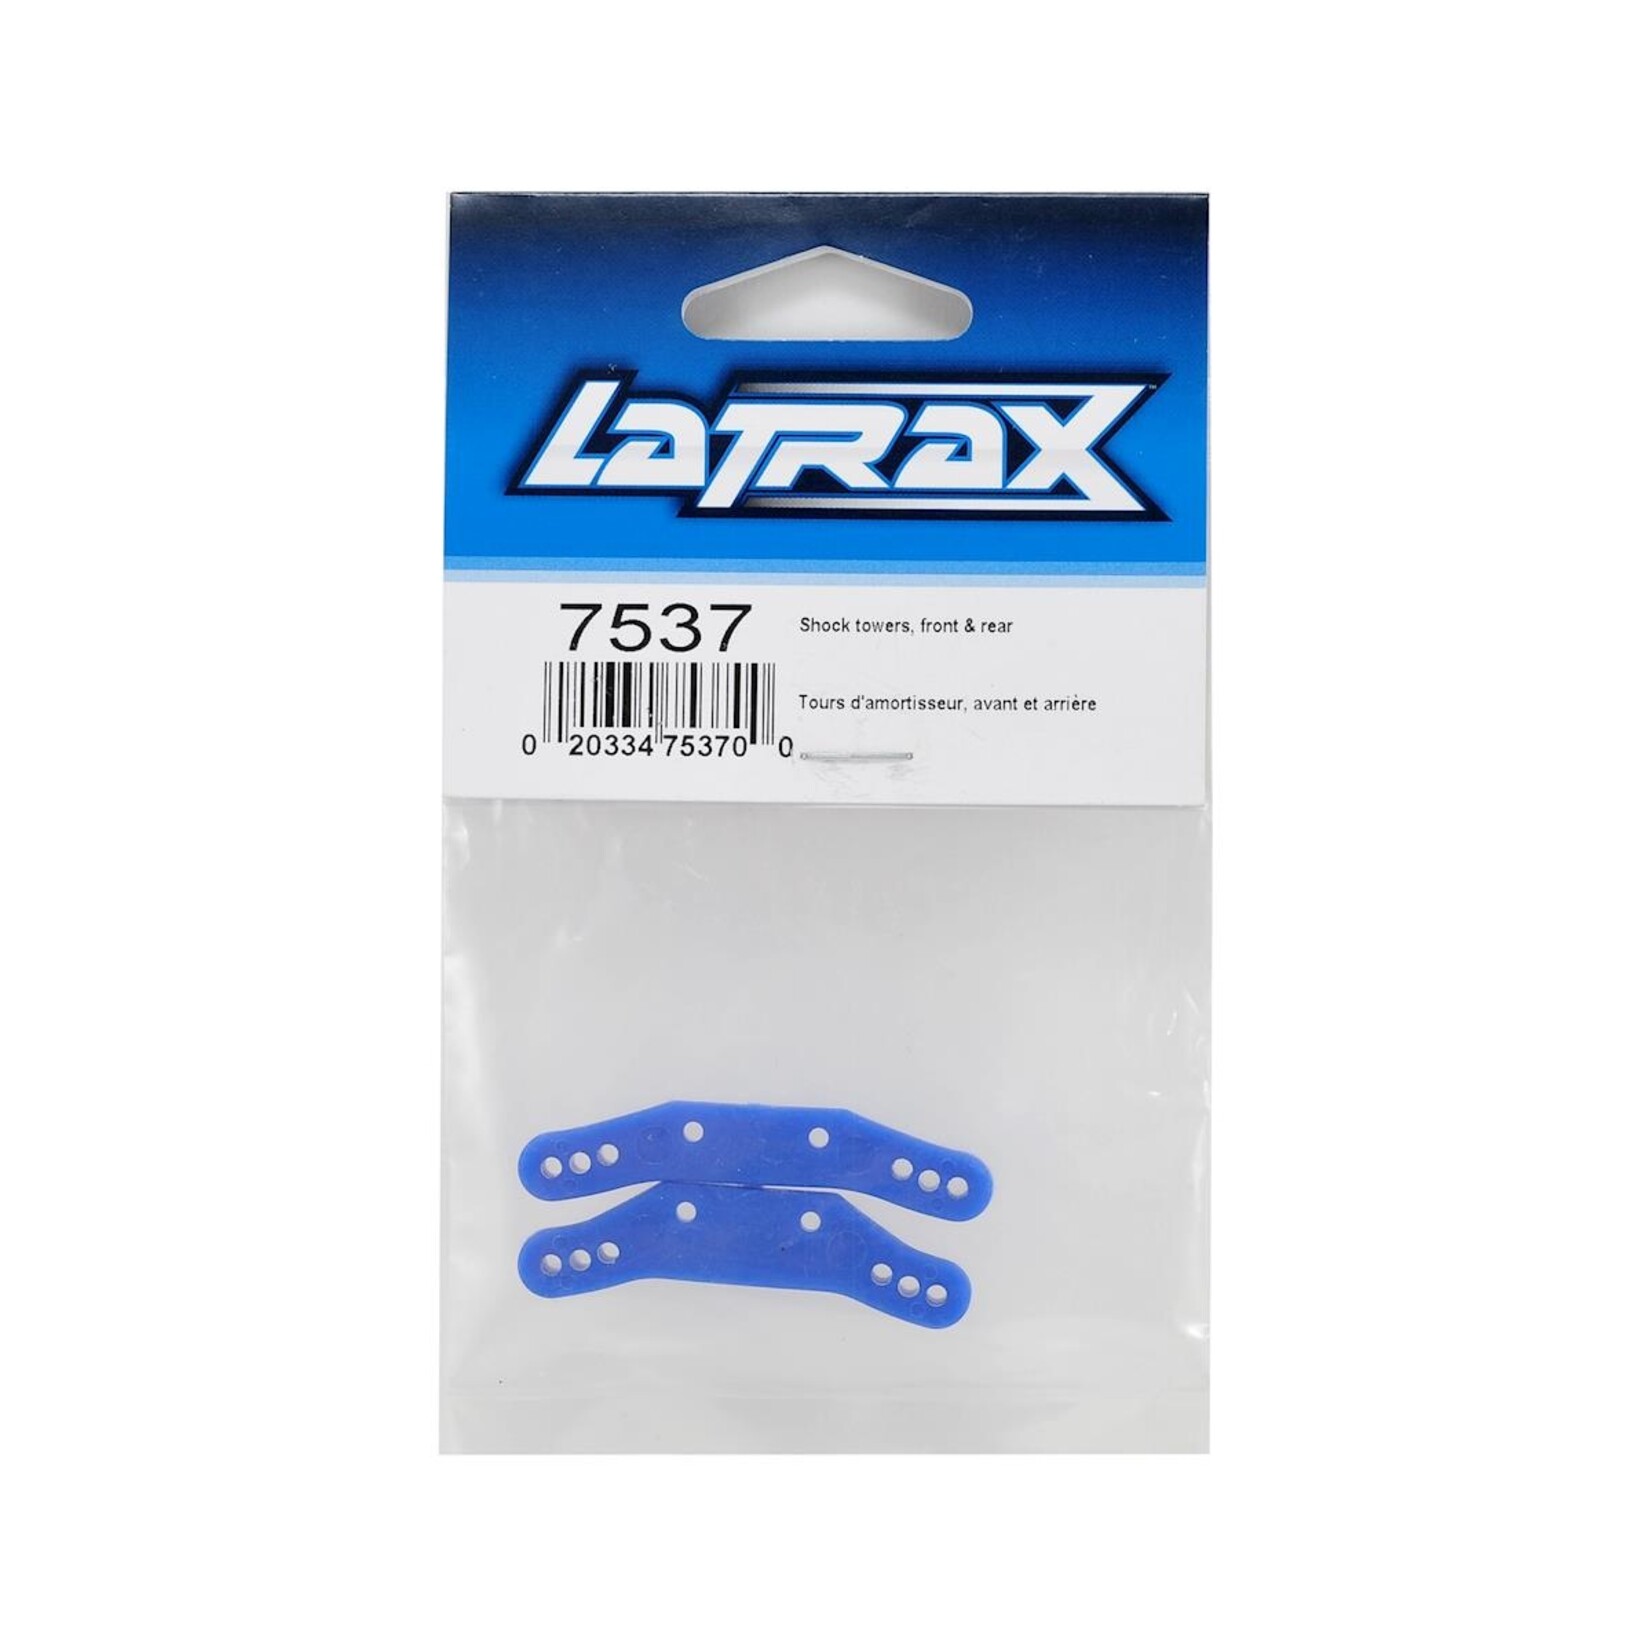 LaTrax Traxxas LaTrax Front & Rear Shock Tower Set #7537